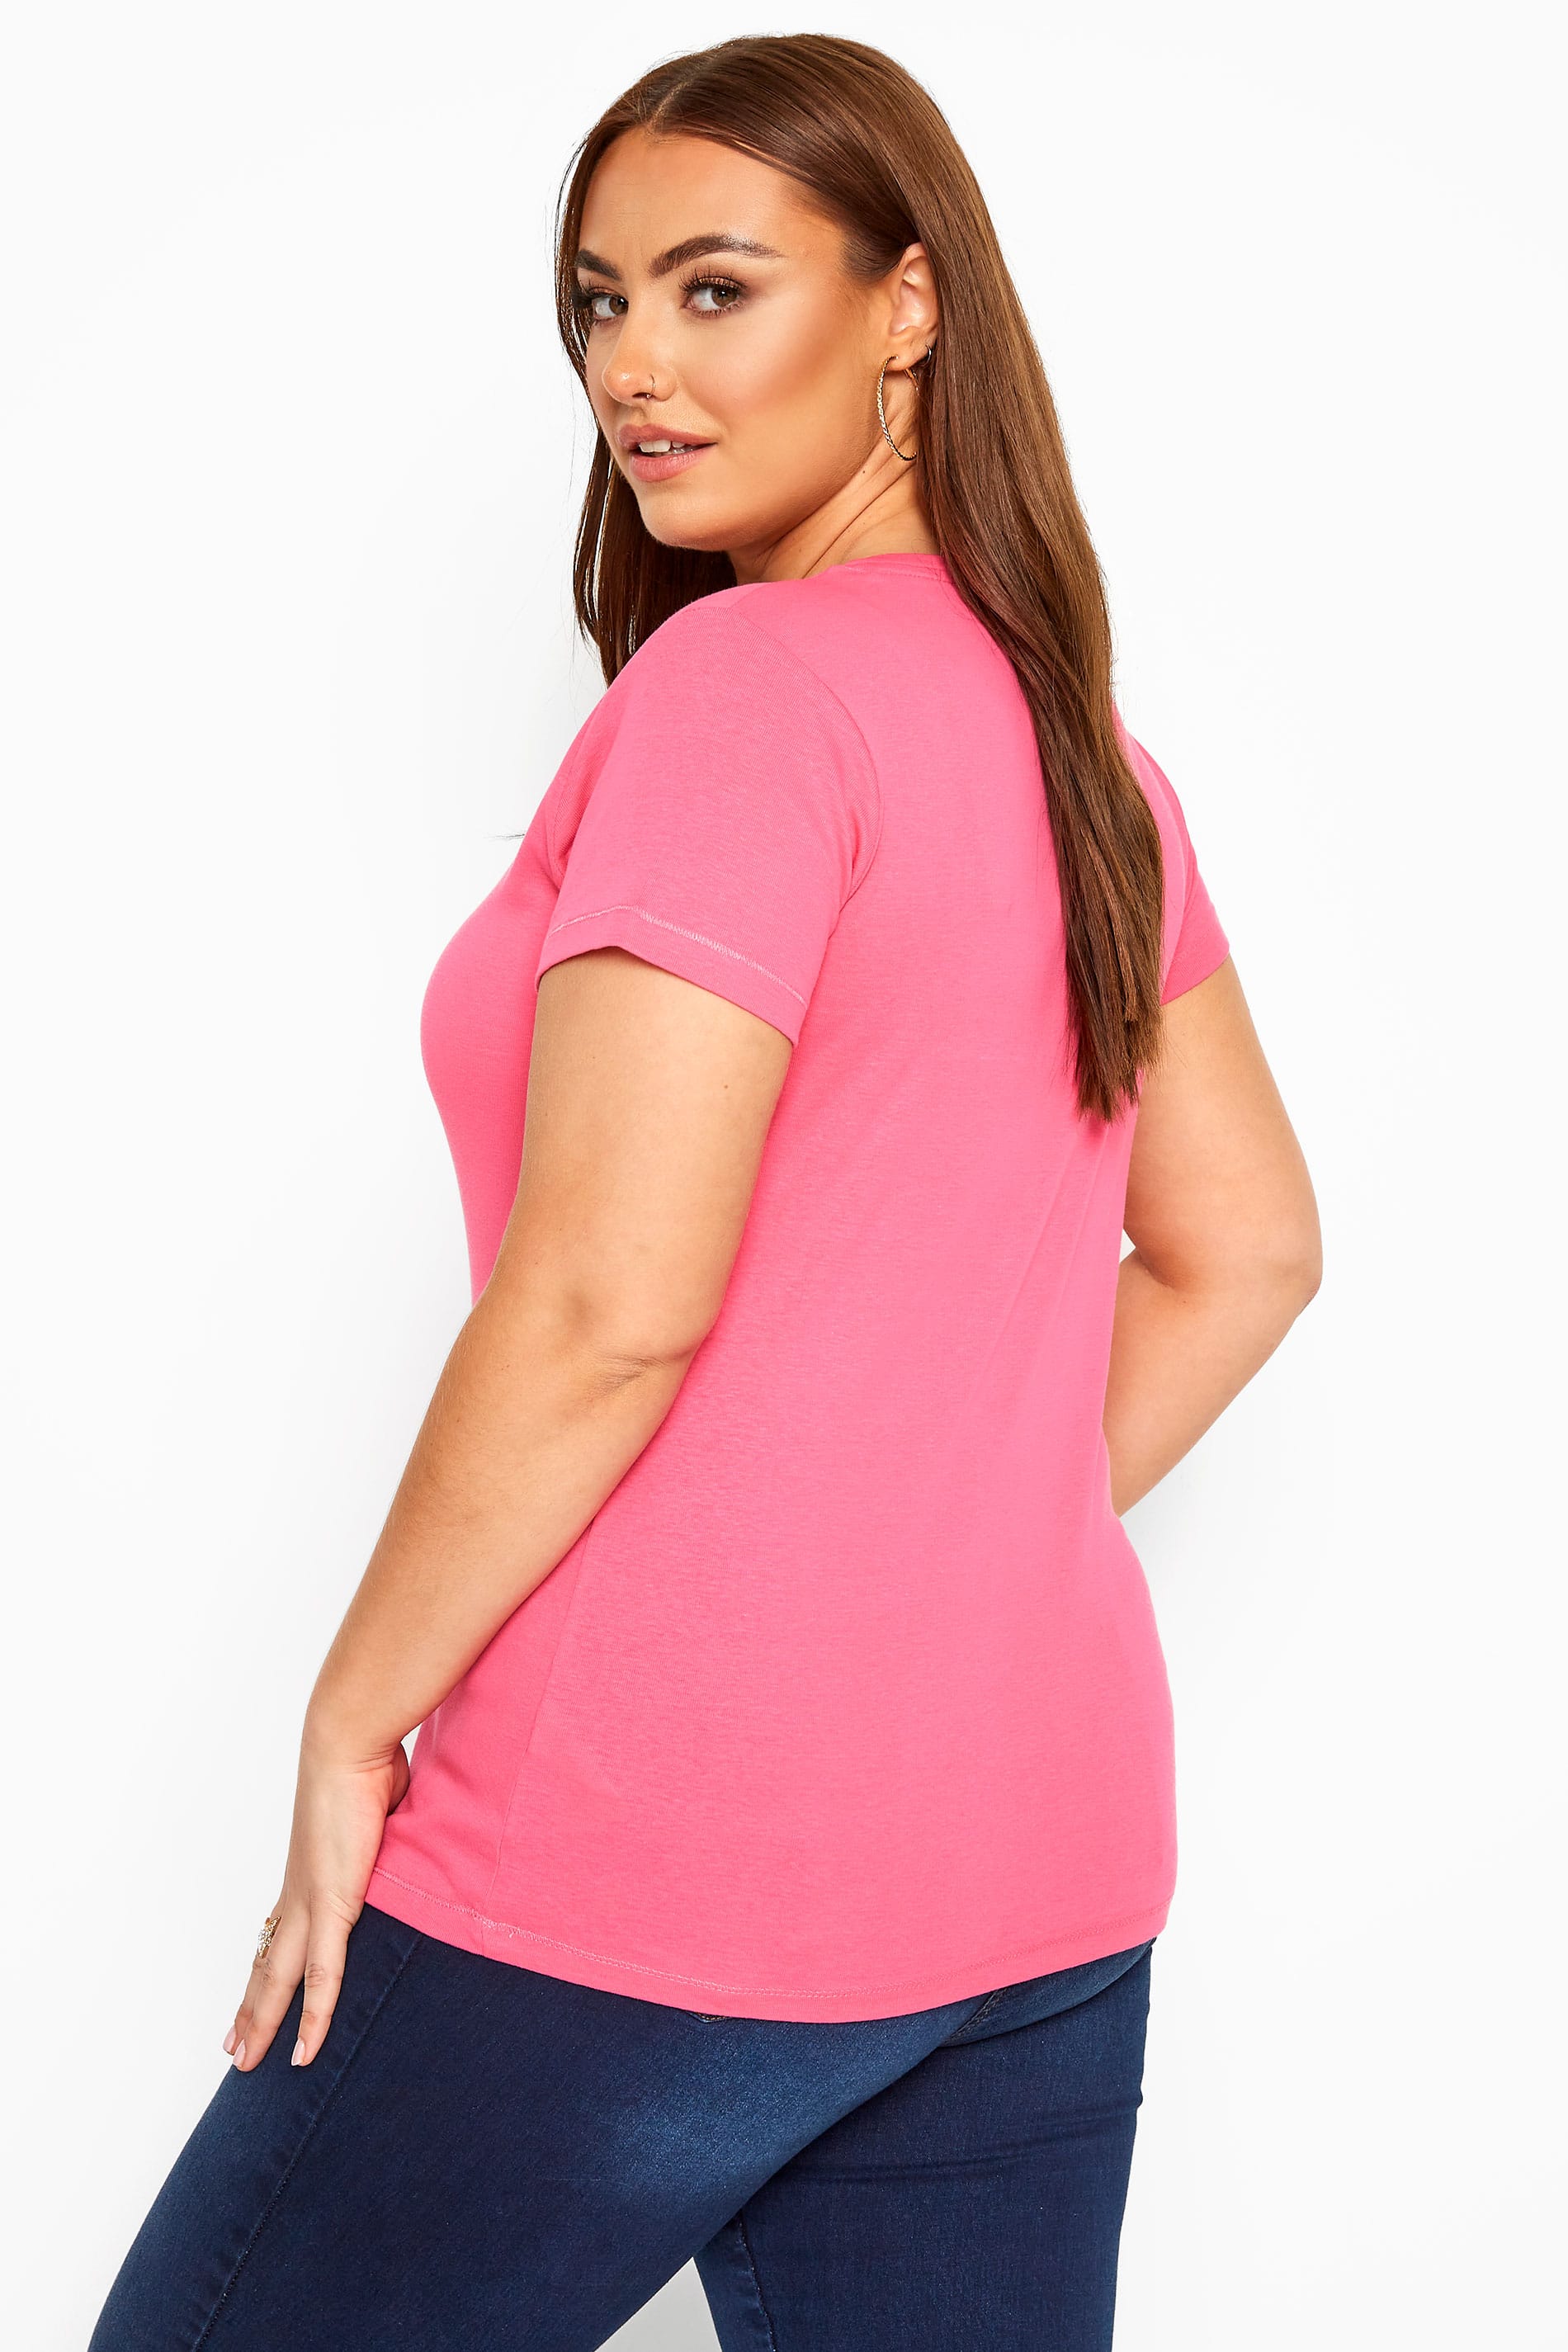 Plus Size Magenta Pink V Neck T Shirt Sizes 16 To 36 Yours Clothing